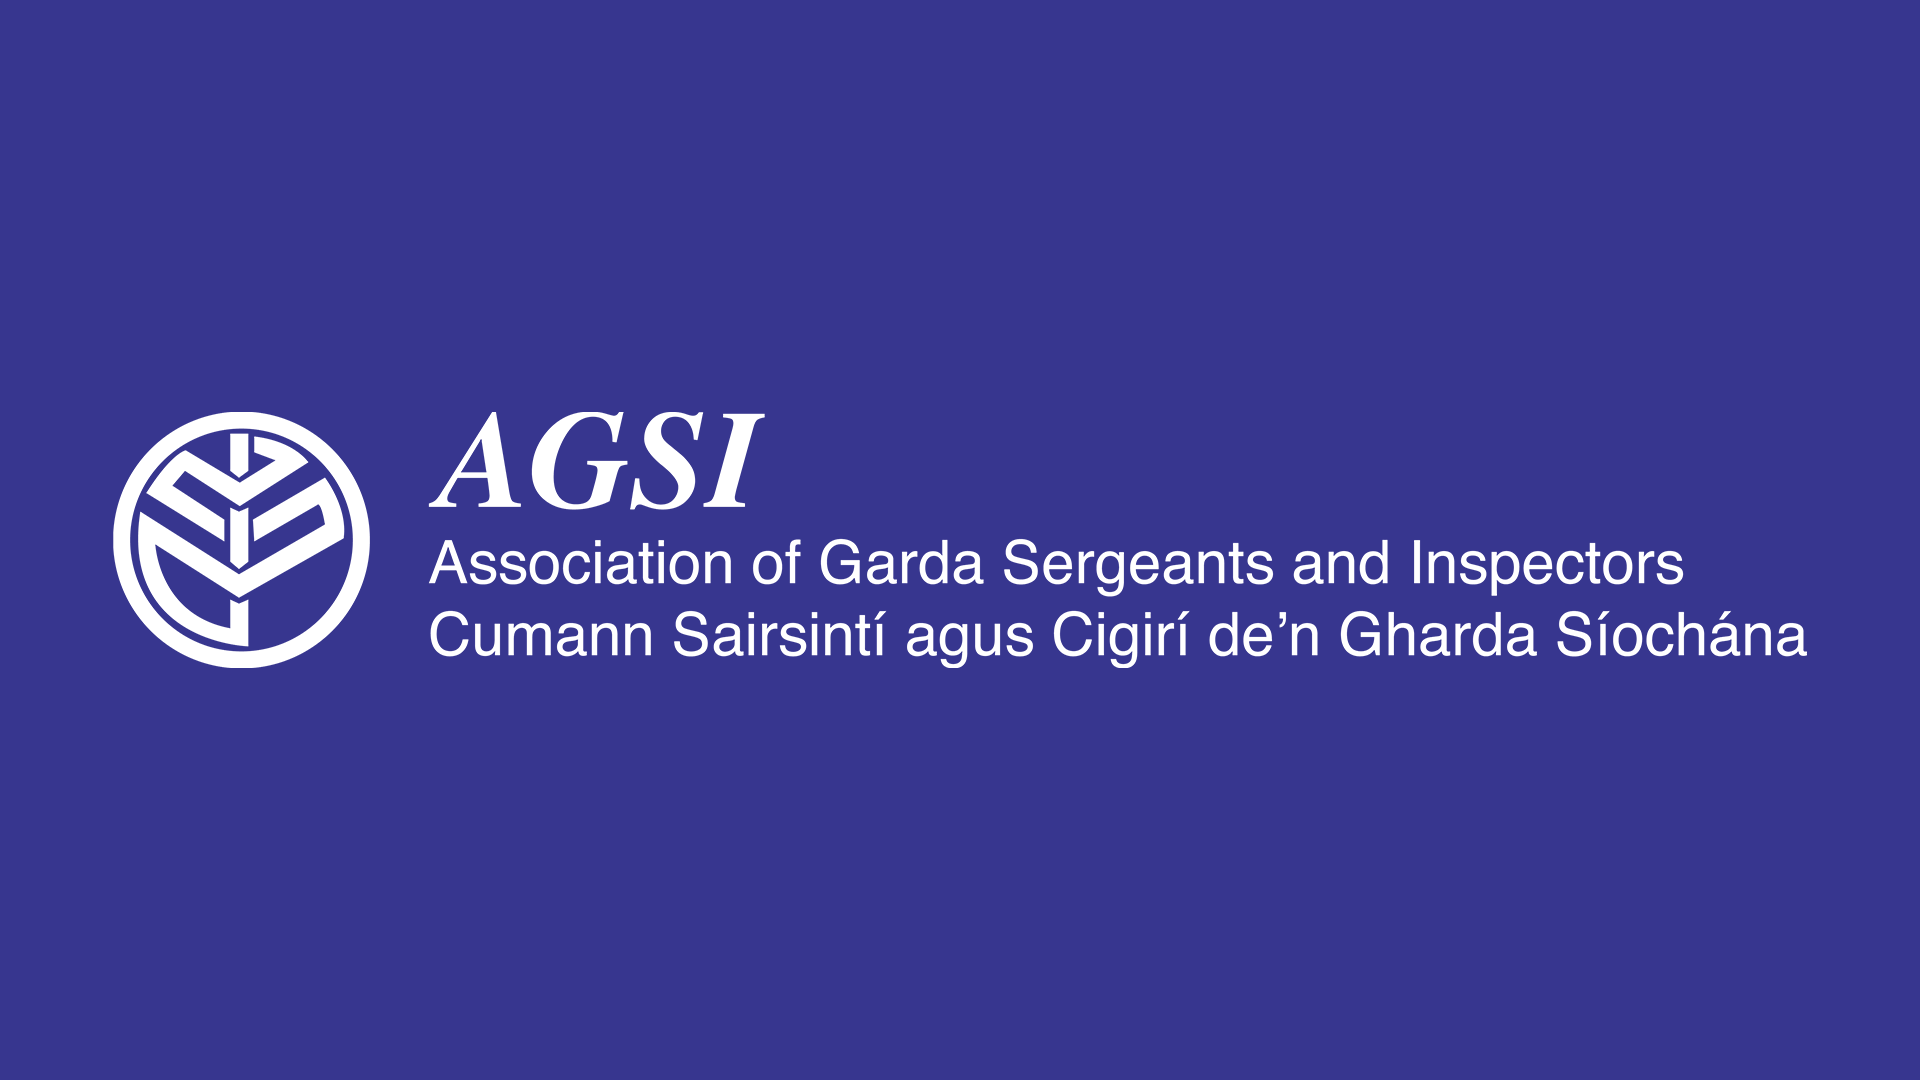 AGSI Statement on Garda Commissioner No Confidence Vote